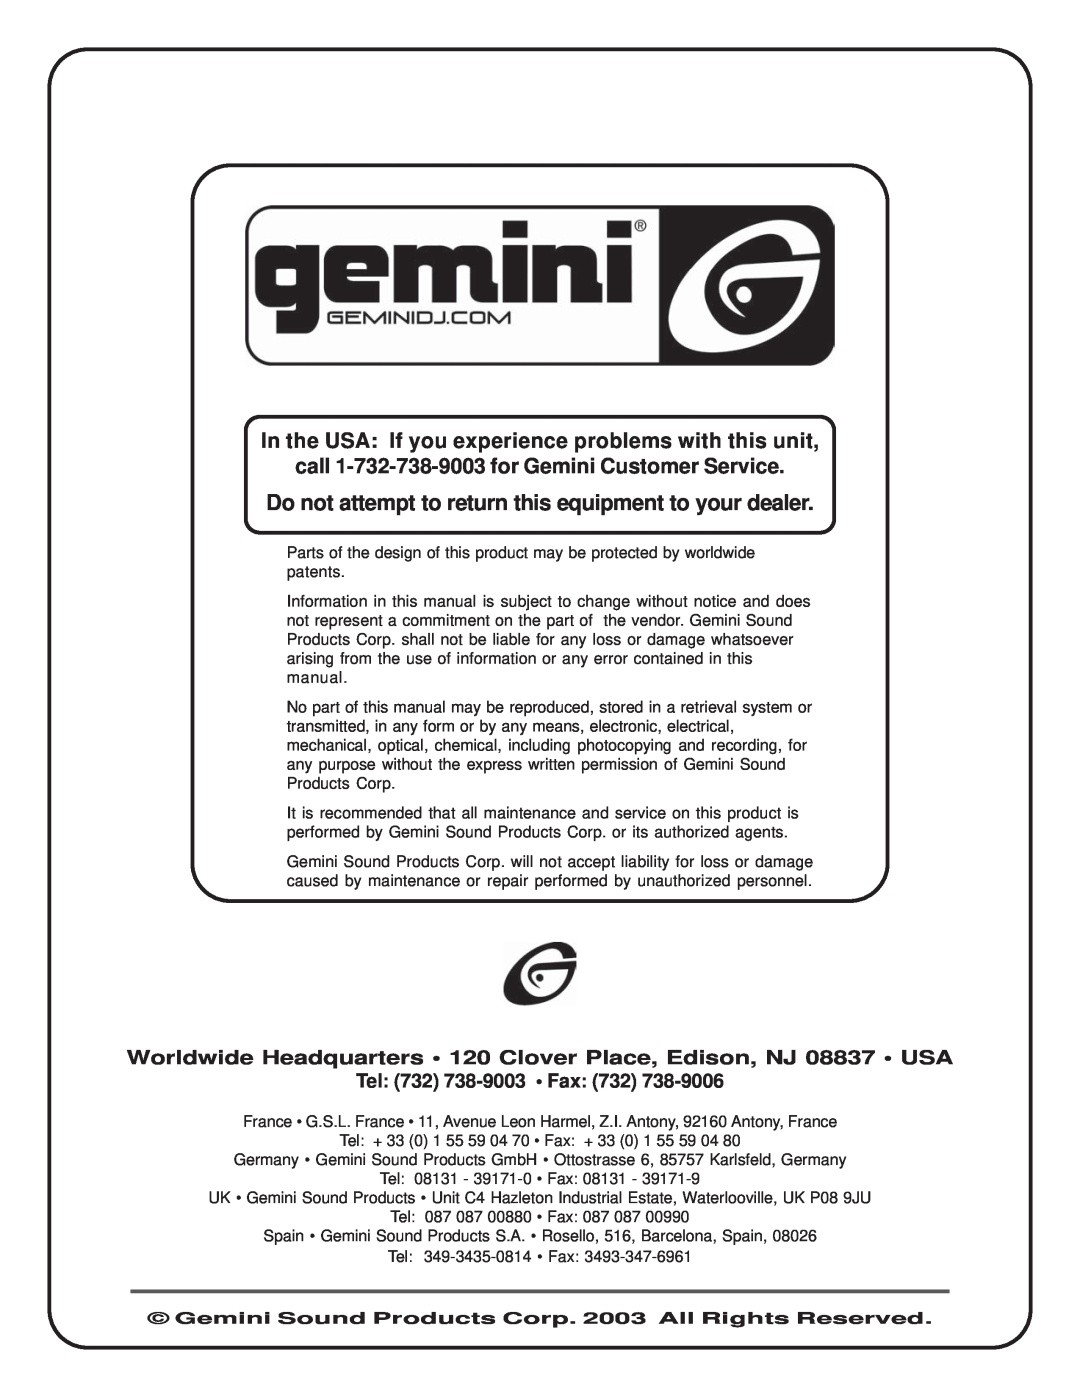 Gemini X1, X3, X4, X2 manual call 1-732-738-9003for Gemini Customer Service, Tel 732 738-9003 Fax 